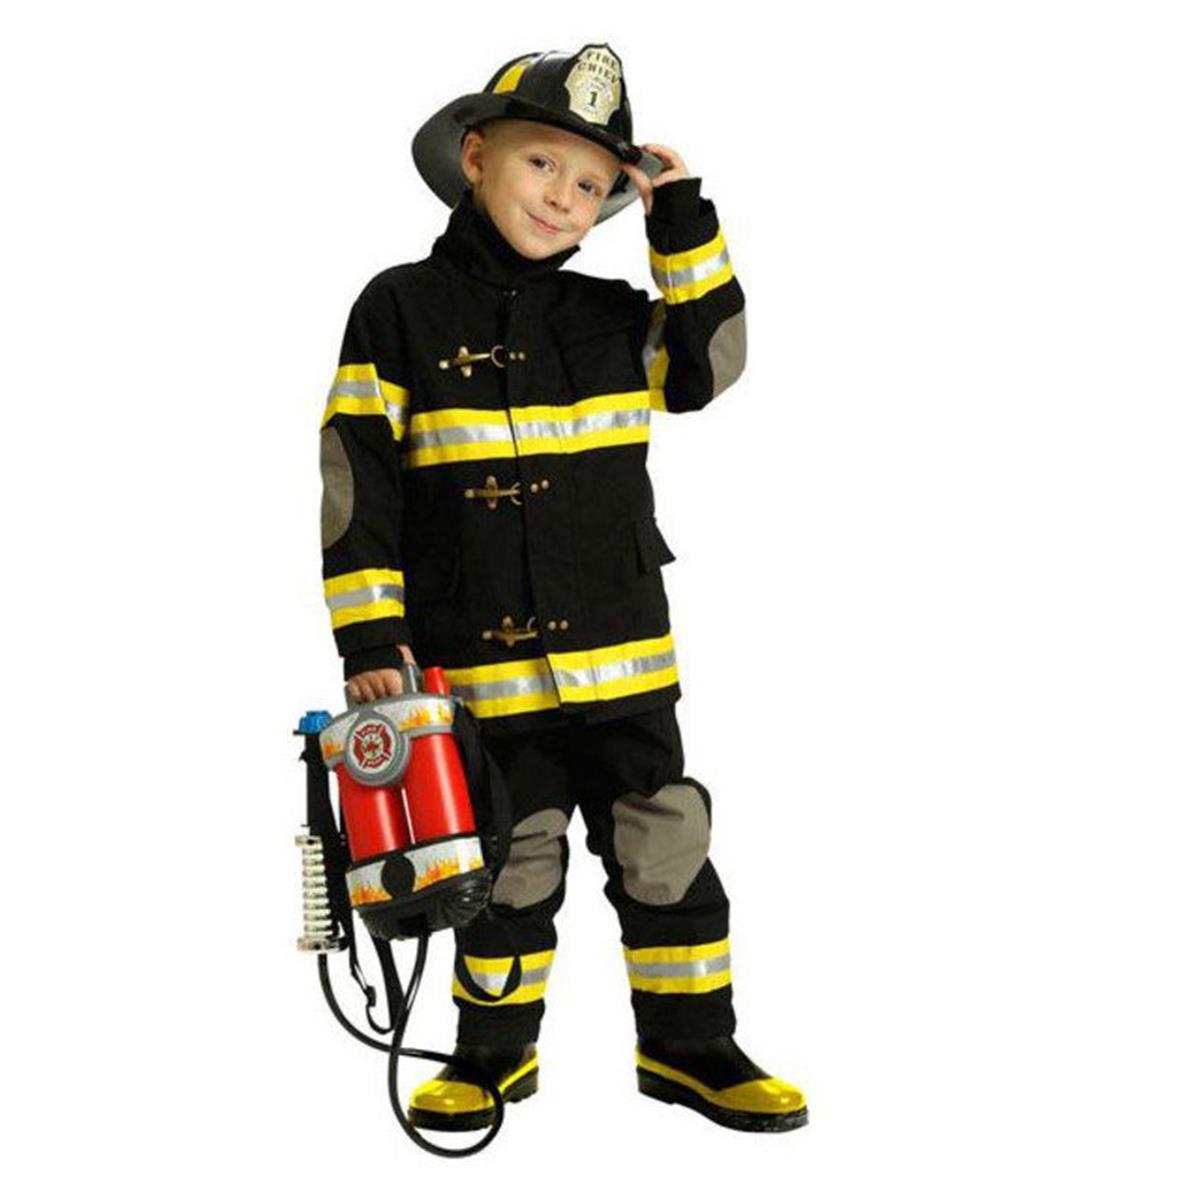 279347 Child Junior Fireman Costume - Small